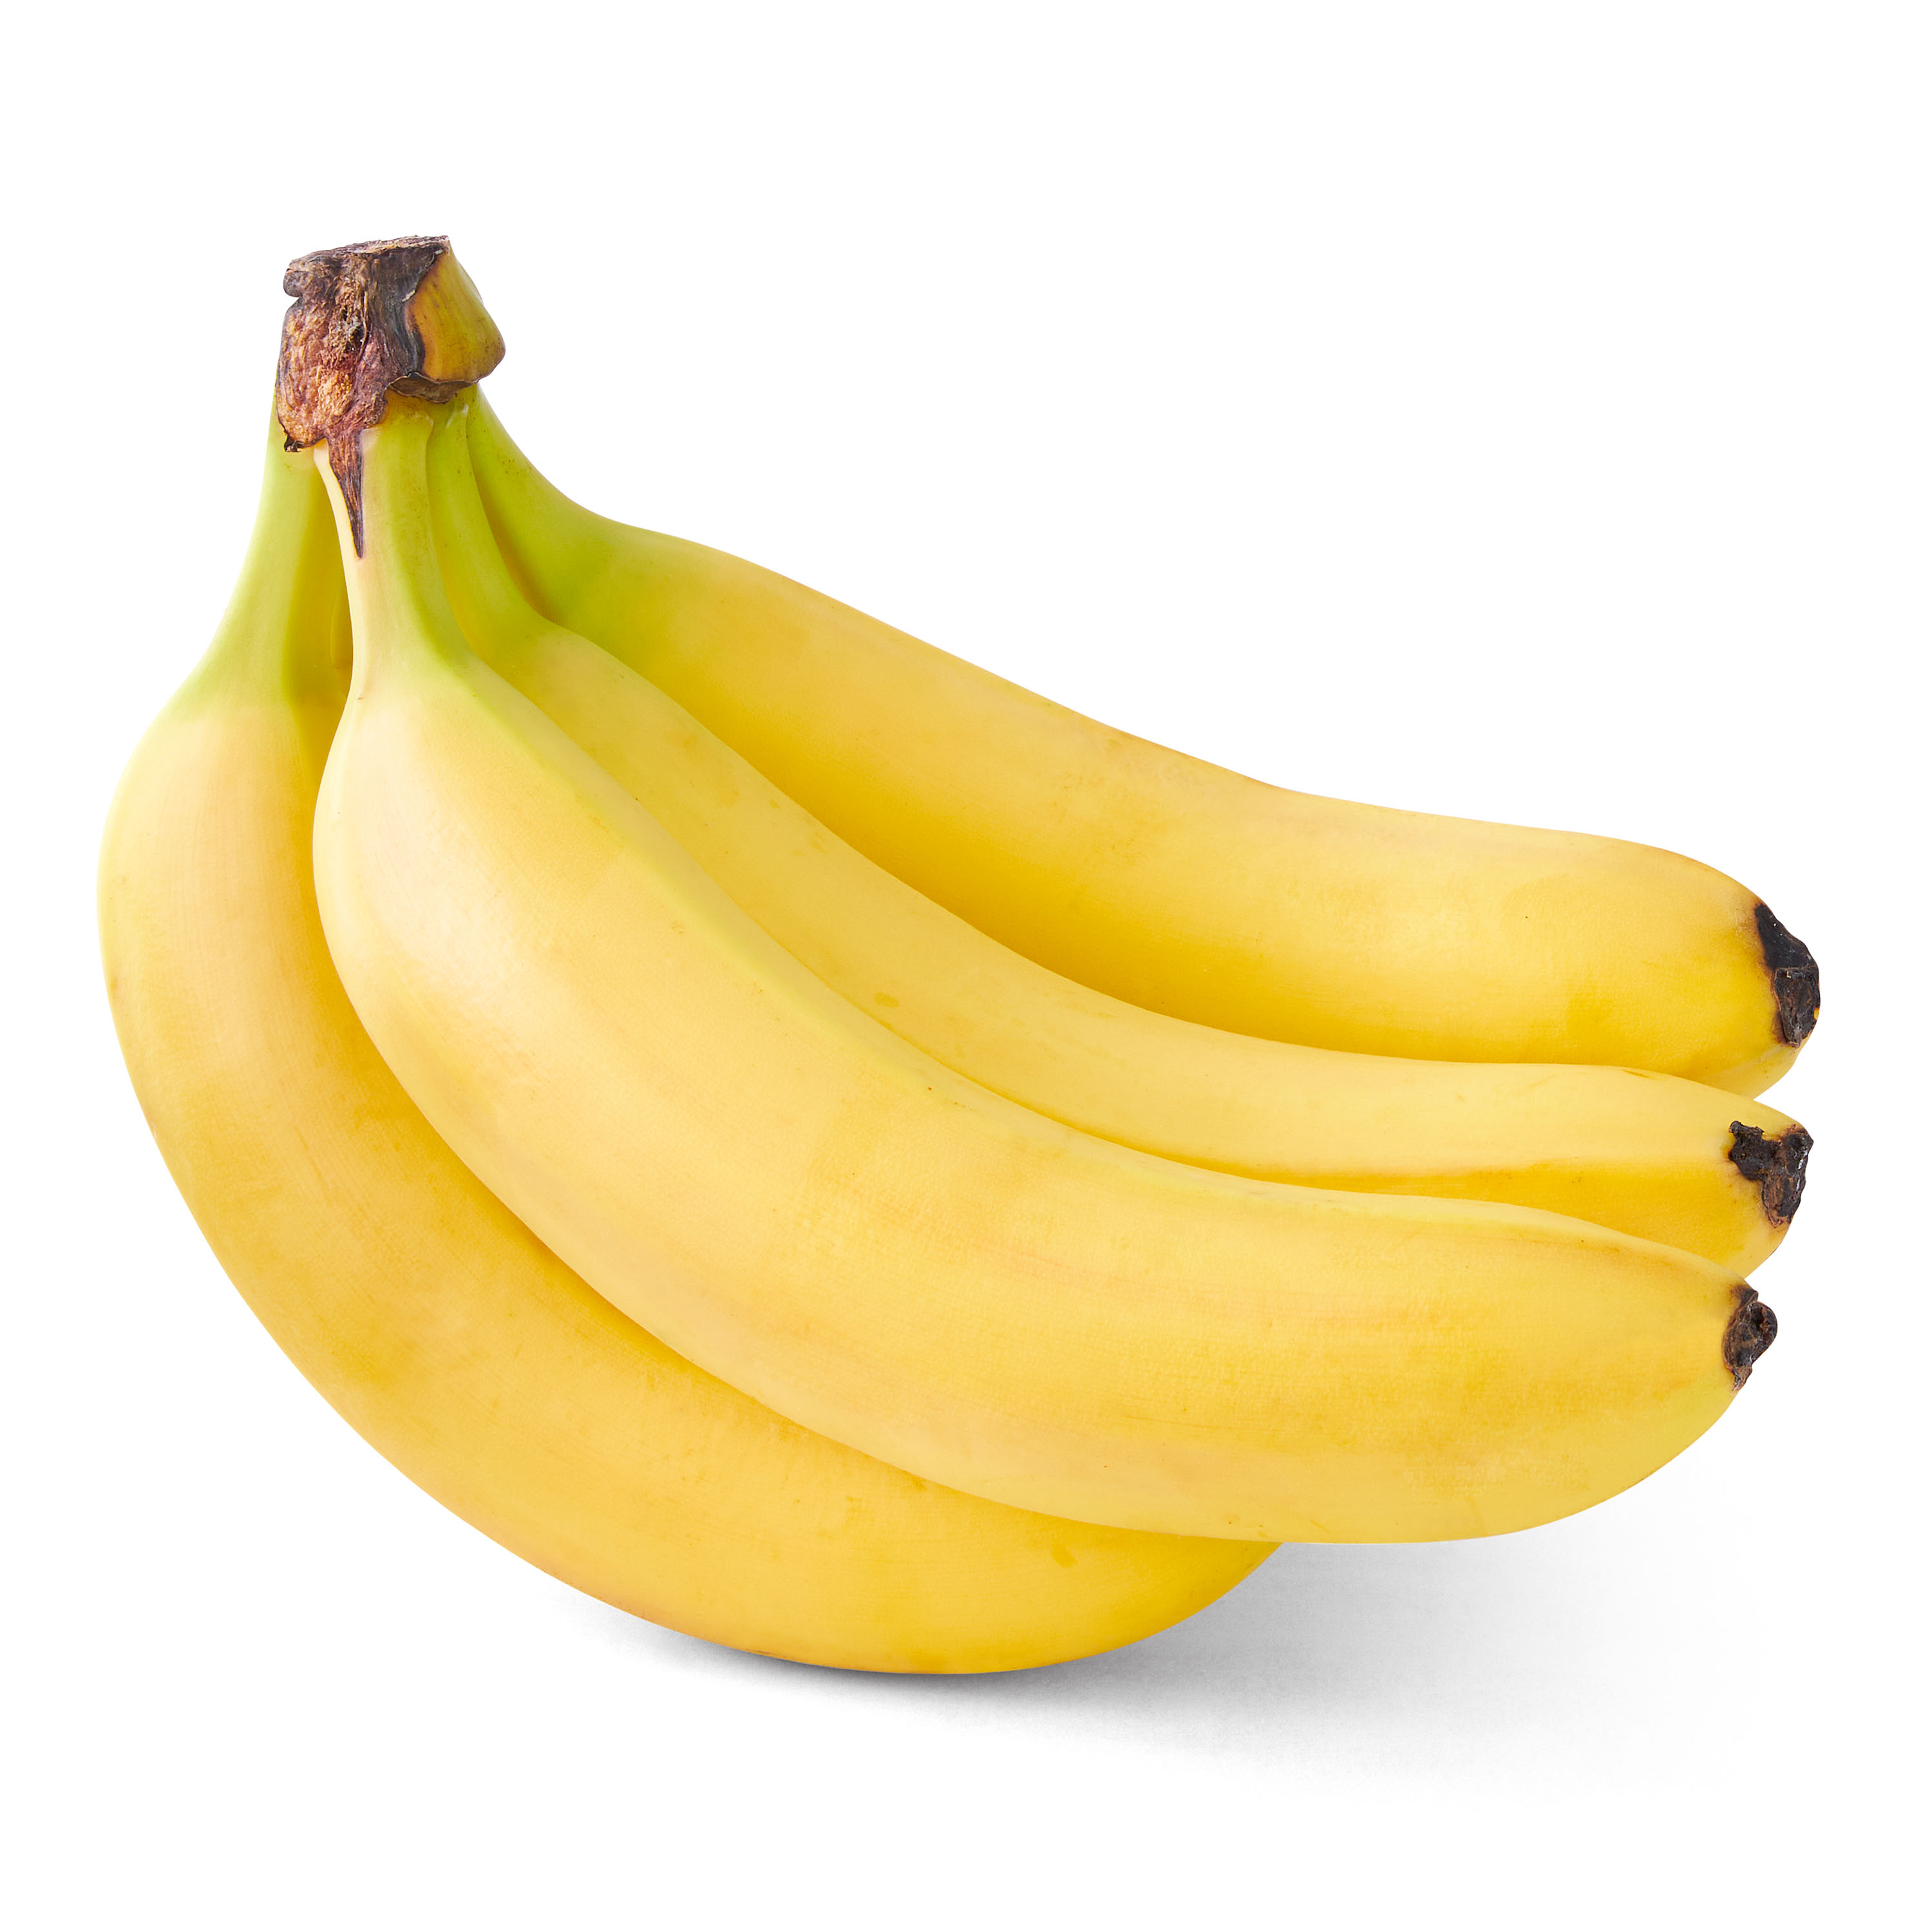 Marketside Fresh Organic Bananas, Bunch - image 3 of 7